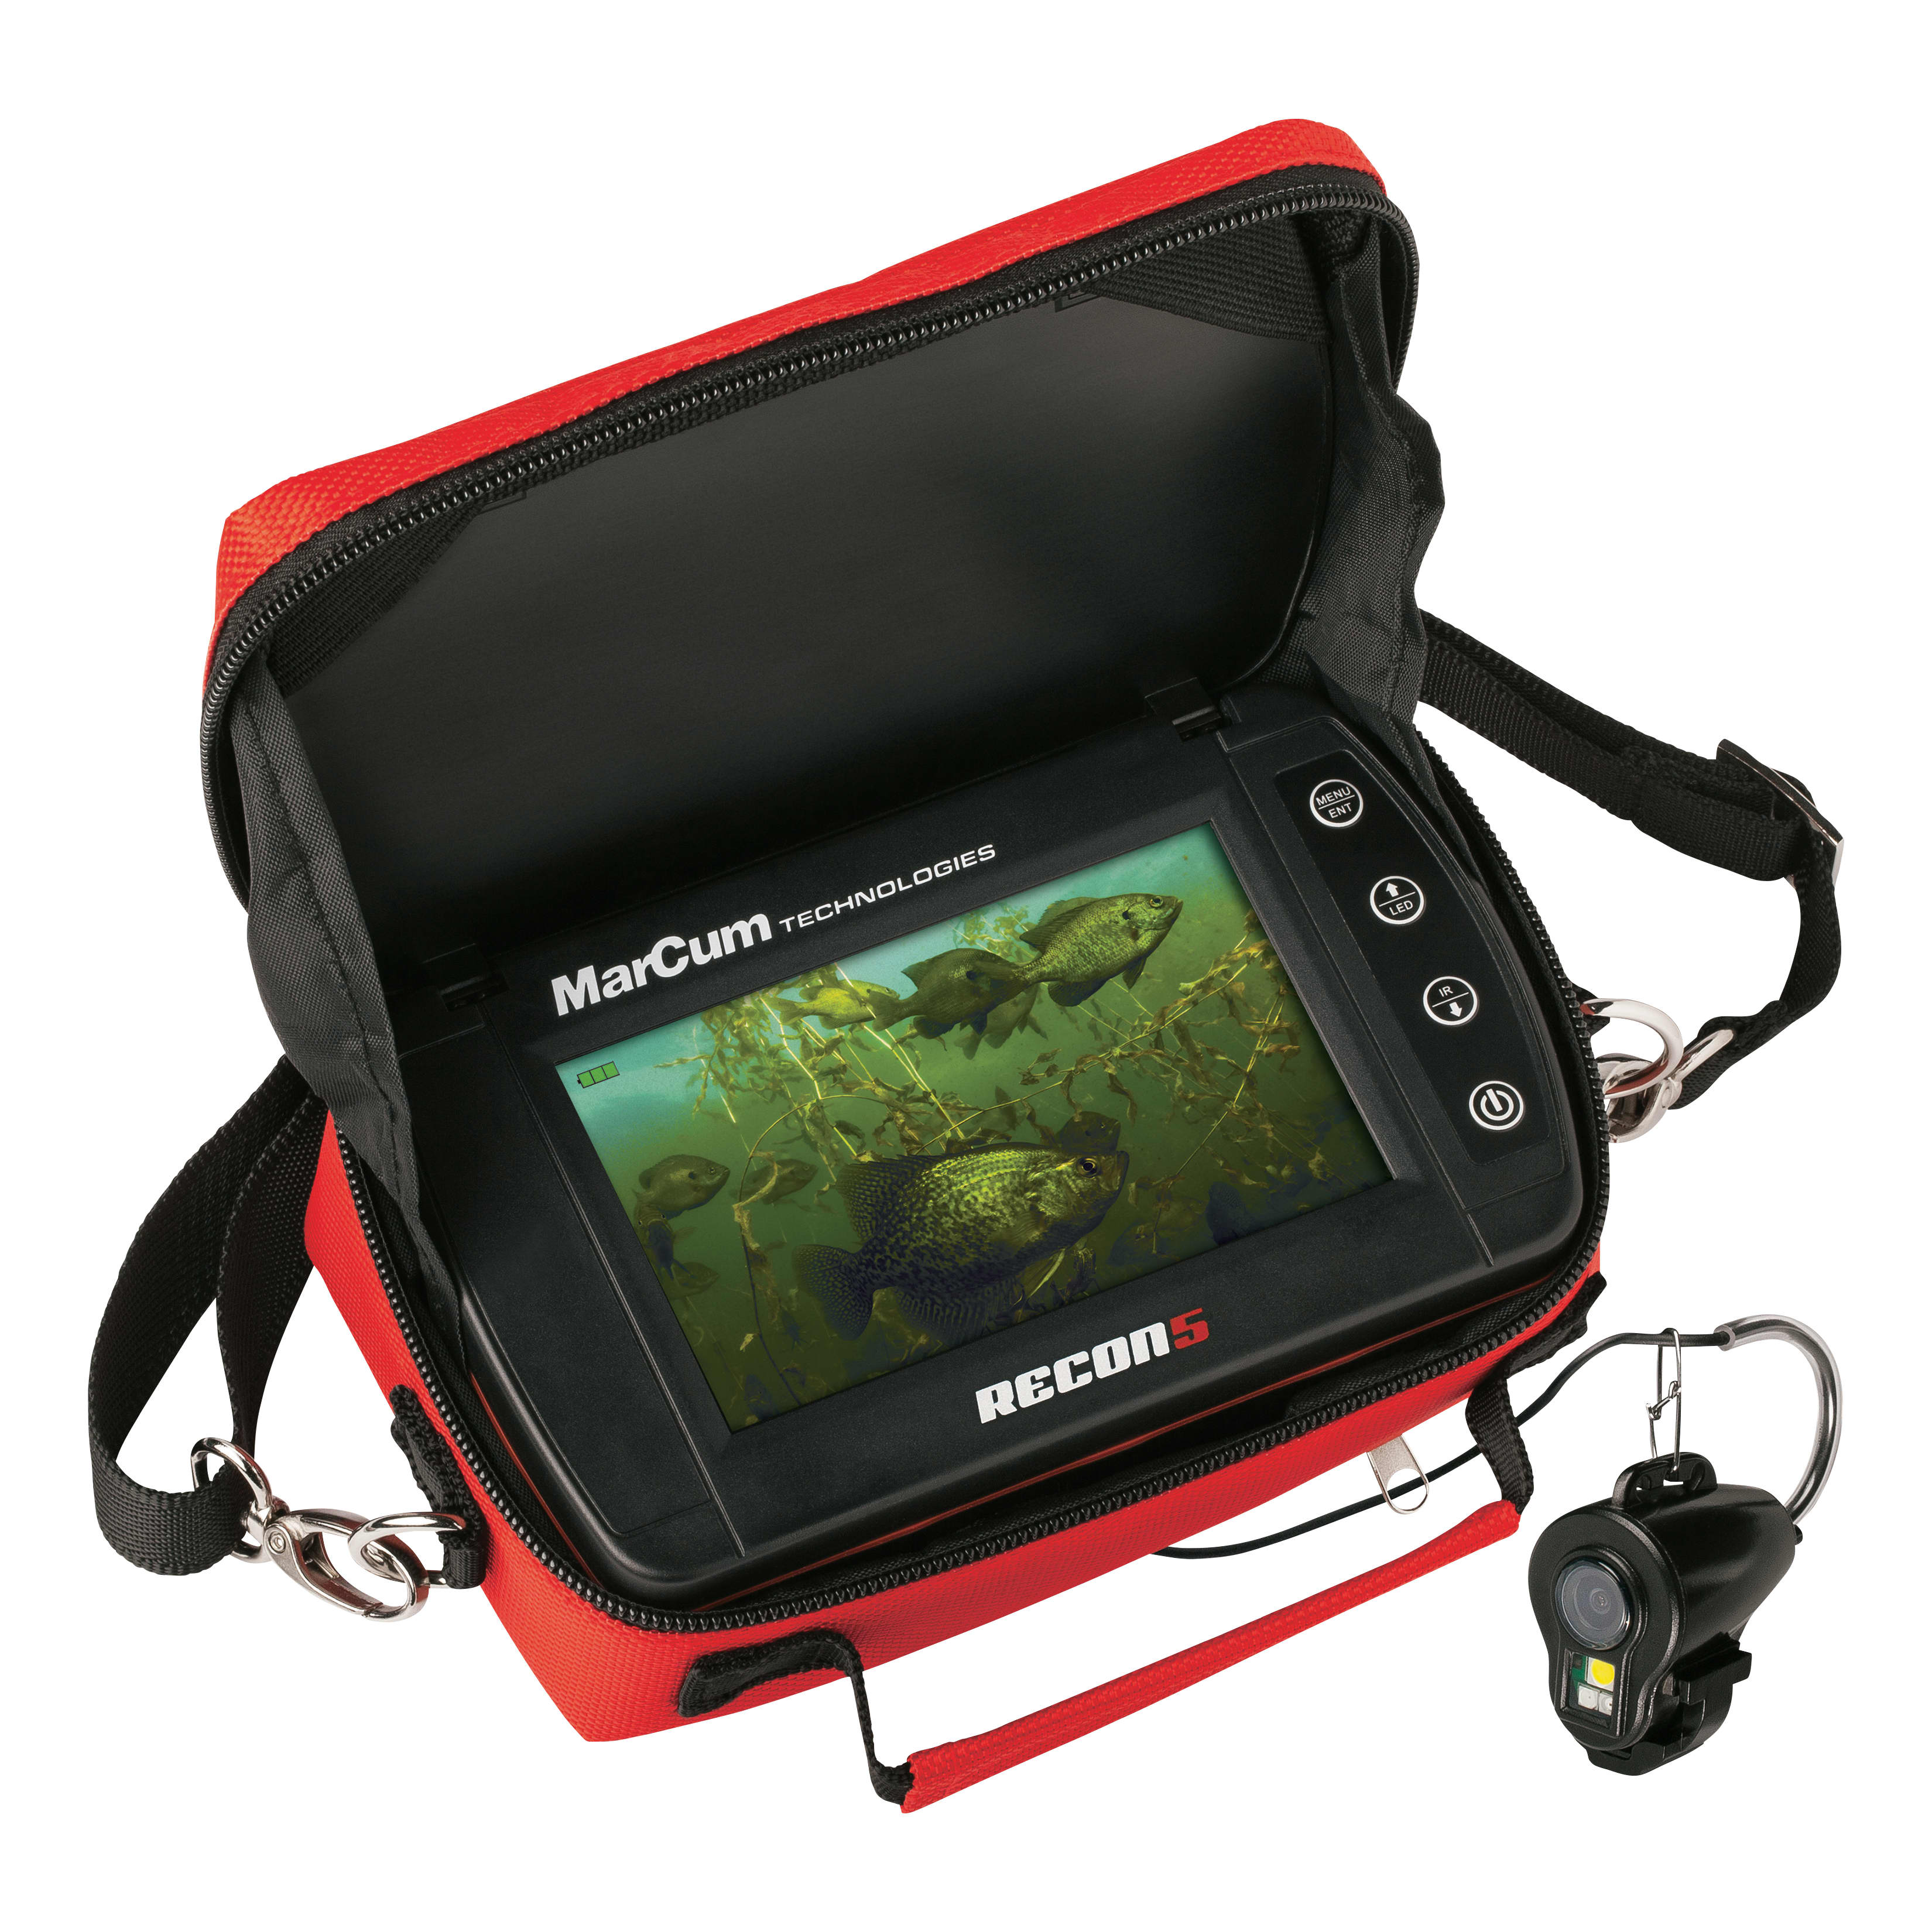 MarCum Recon 5 Underwater Camera - In Case View